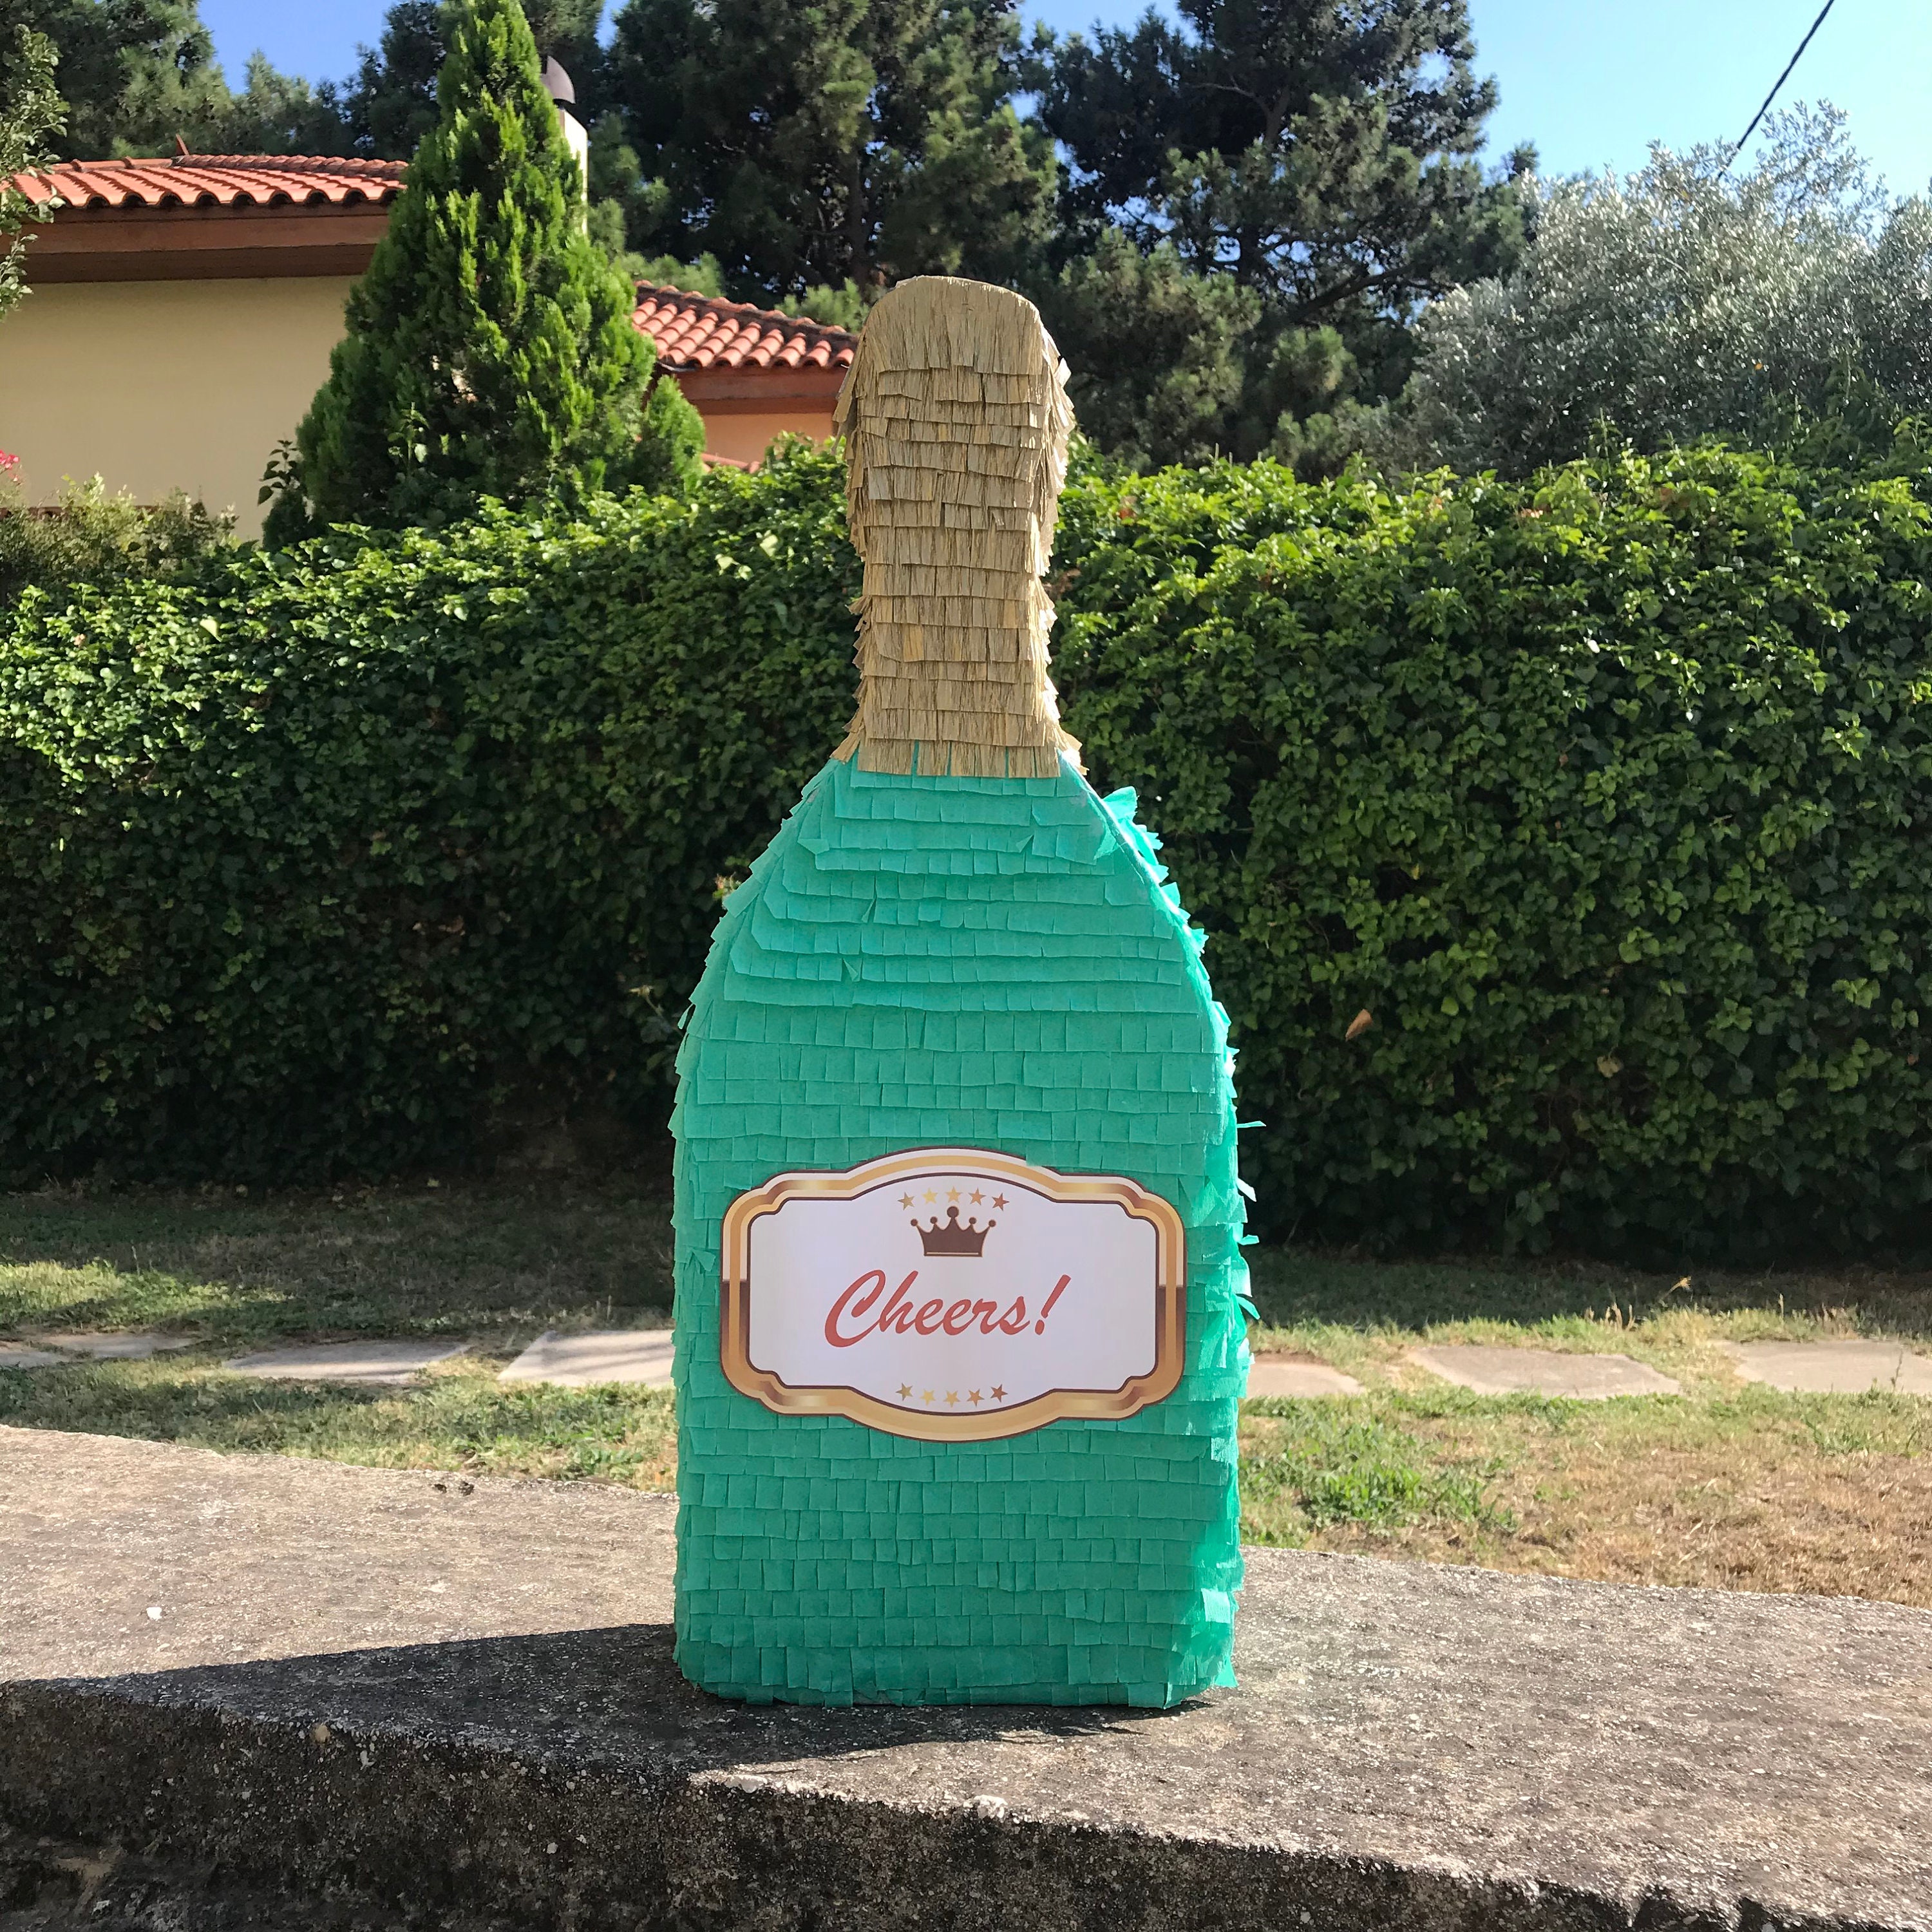 bouteille de champagne relaxdays pinata - anniversaire